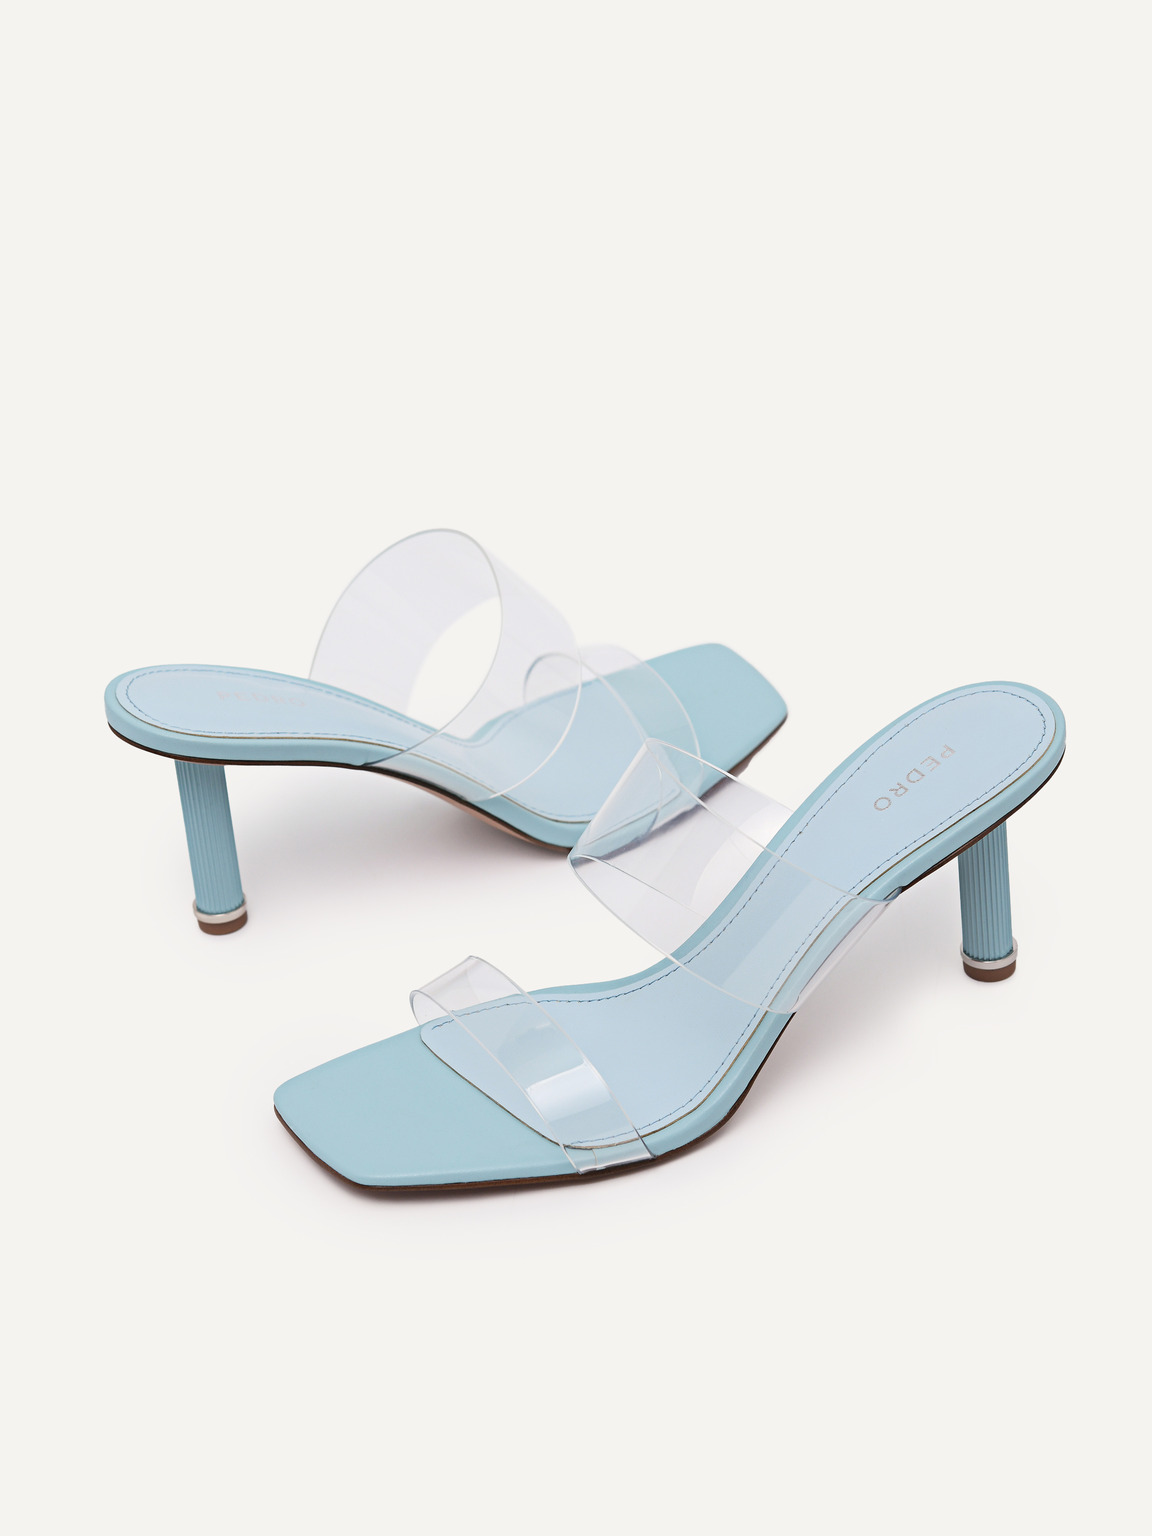 Vinyl Double Strap Heel Sandals, Light Blue